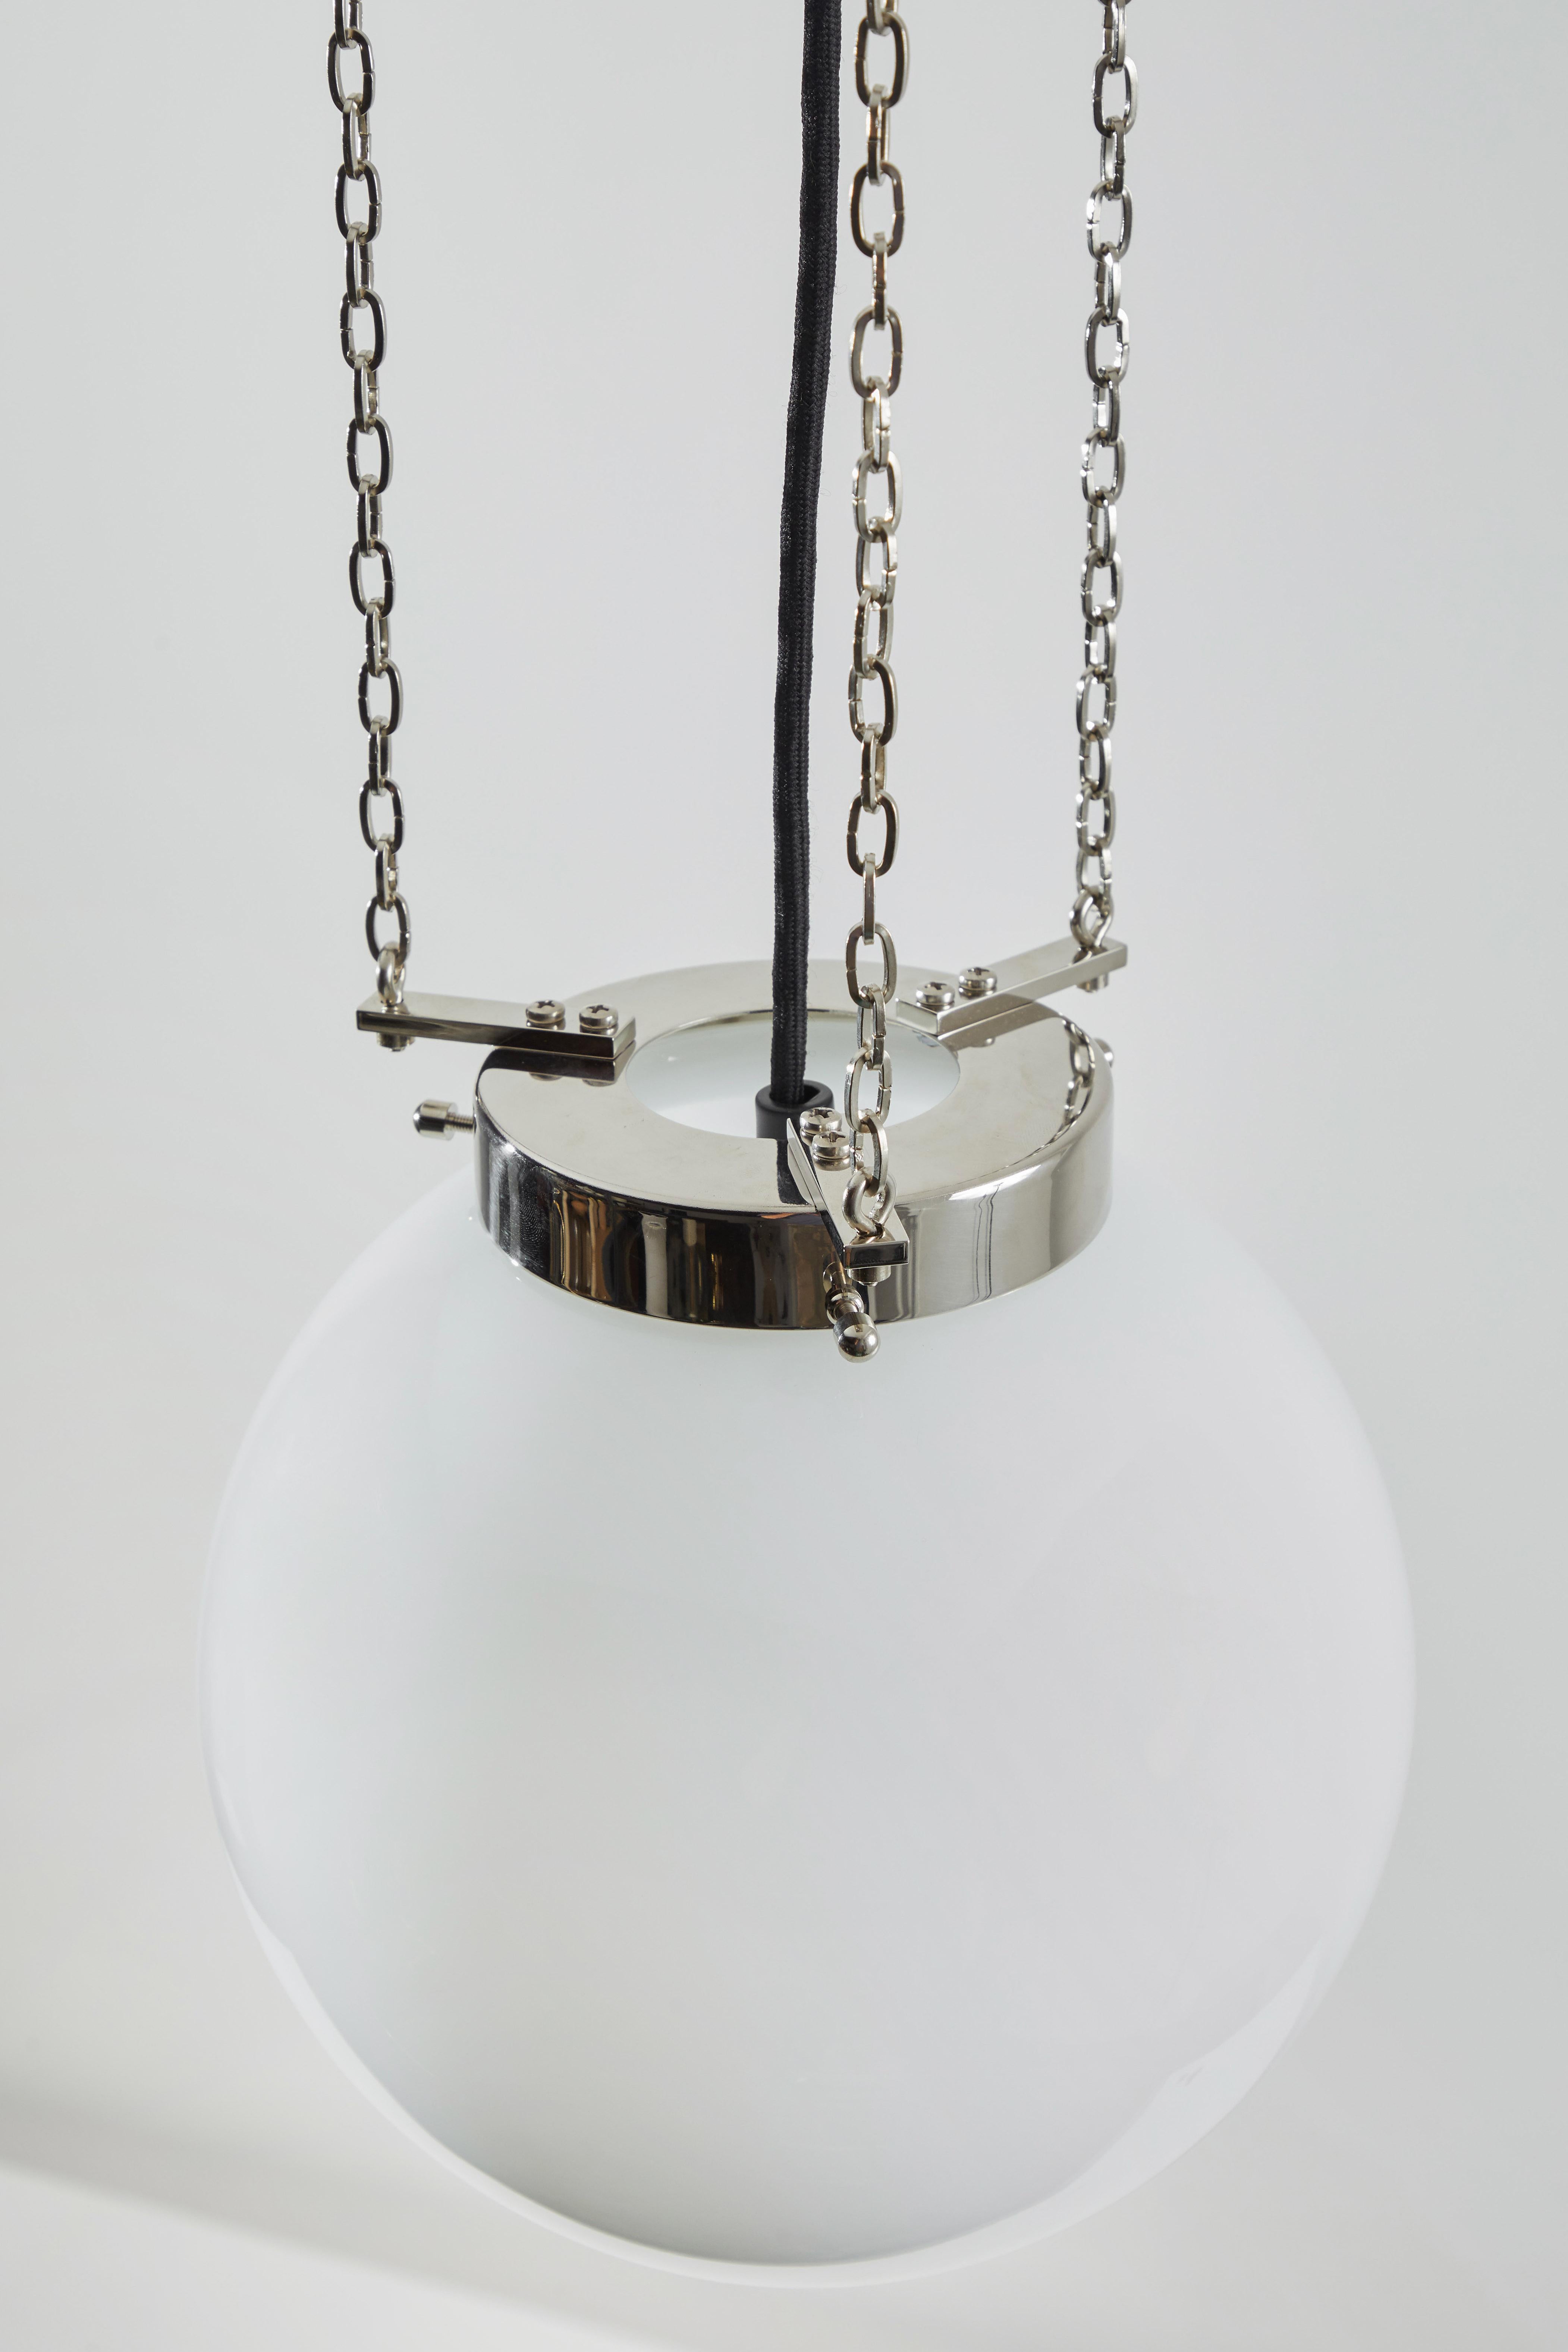 Model HMB 27/250 Bauhaus Suspension Light by Marianne Brandt For Sale 2